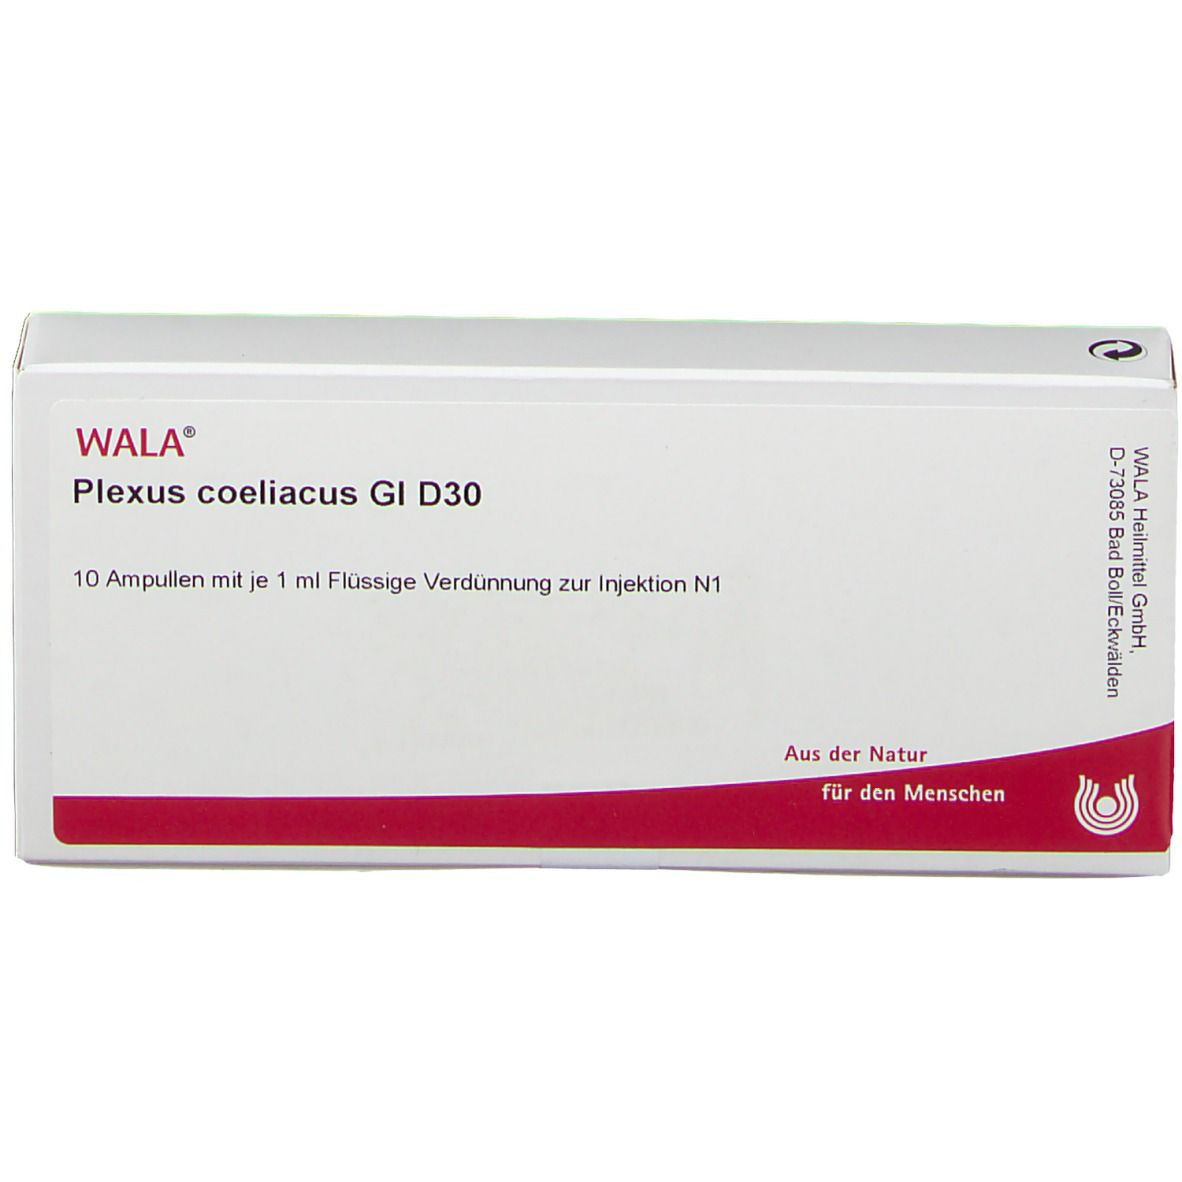 WALA® Plexus coeliacus Gl D 30